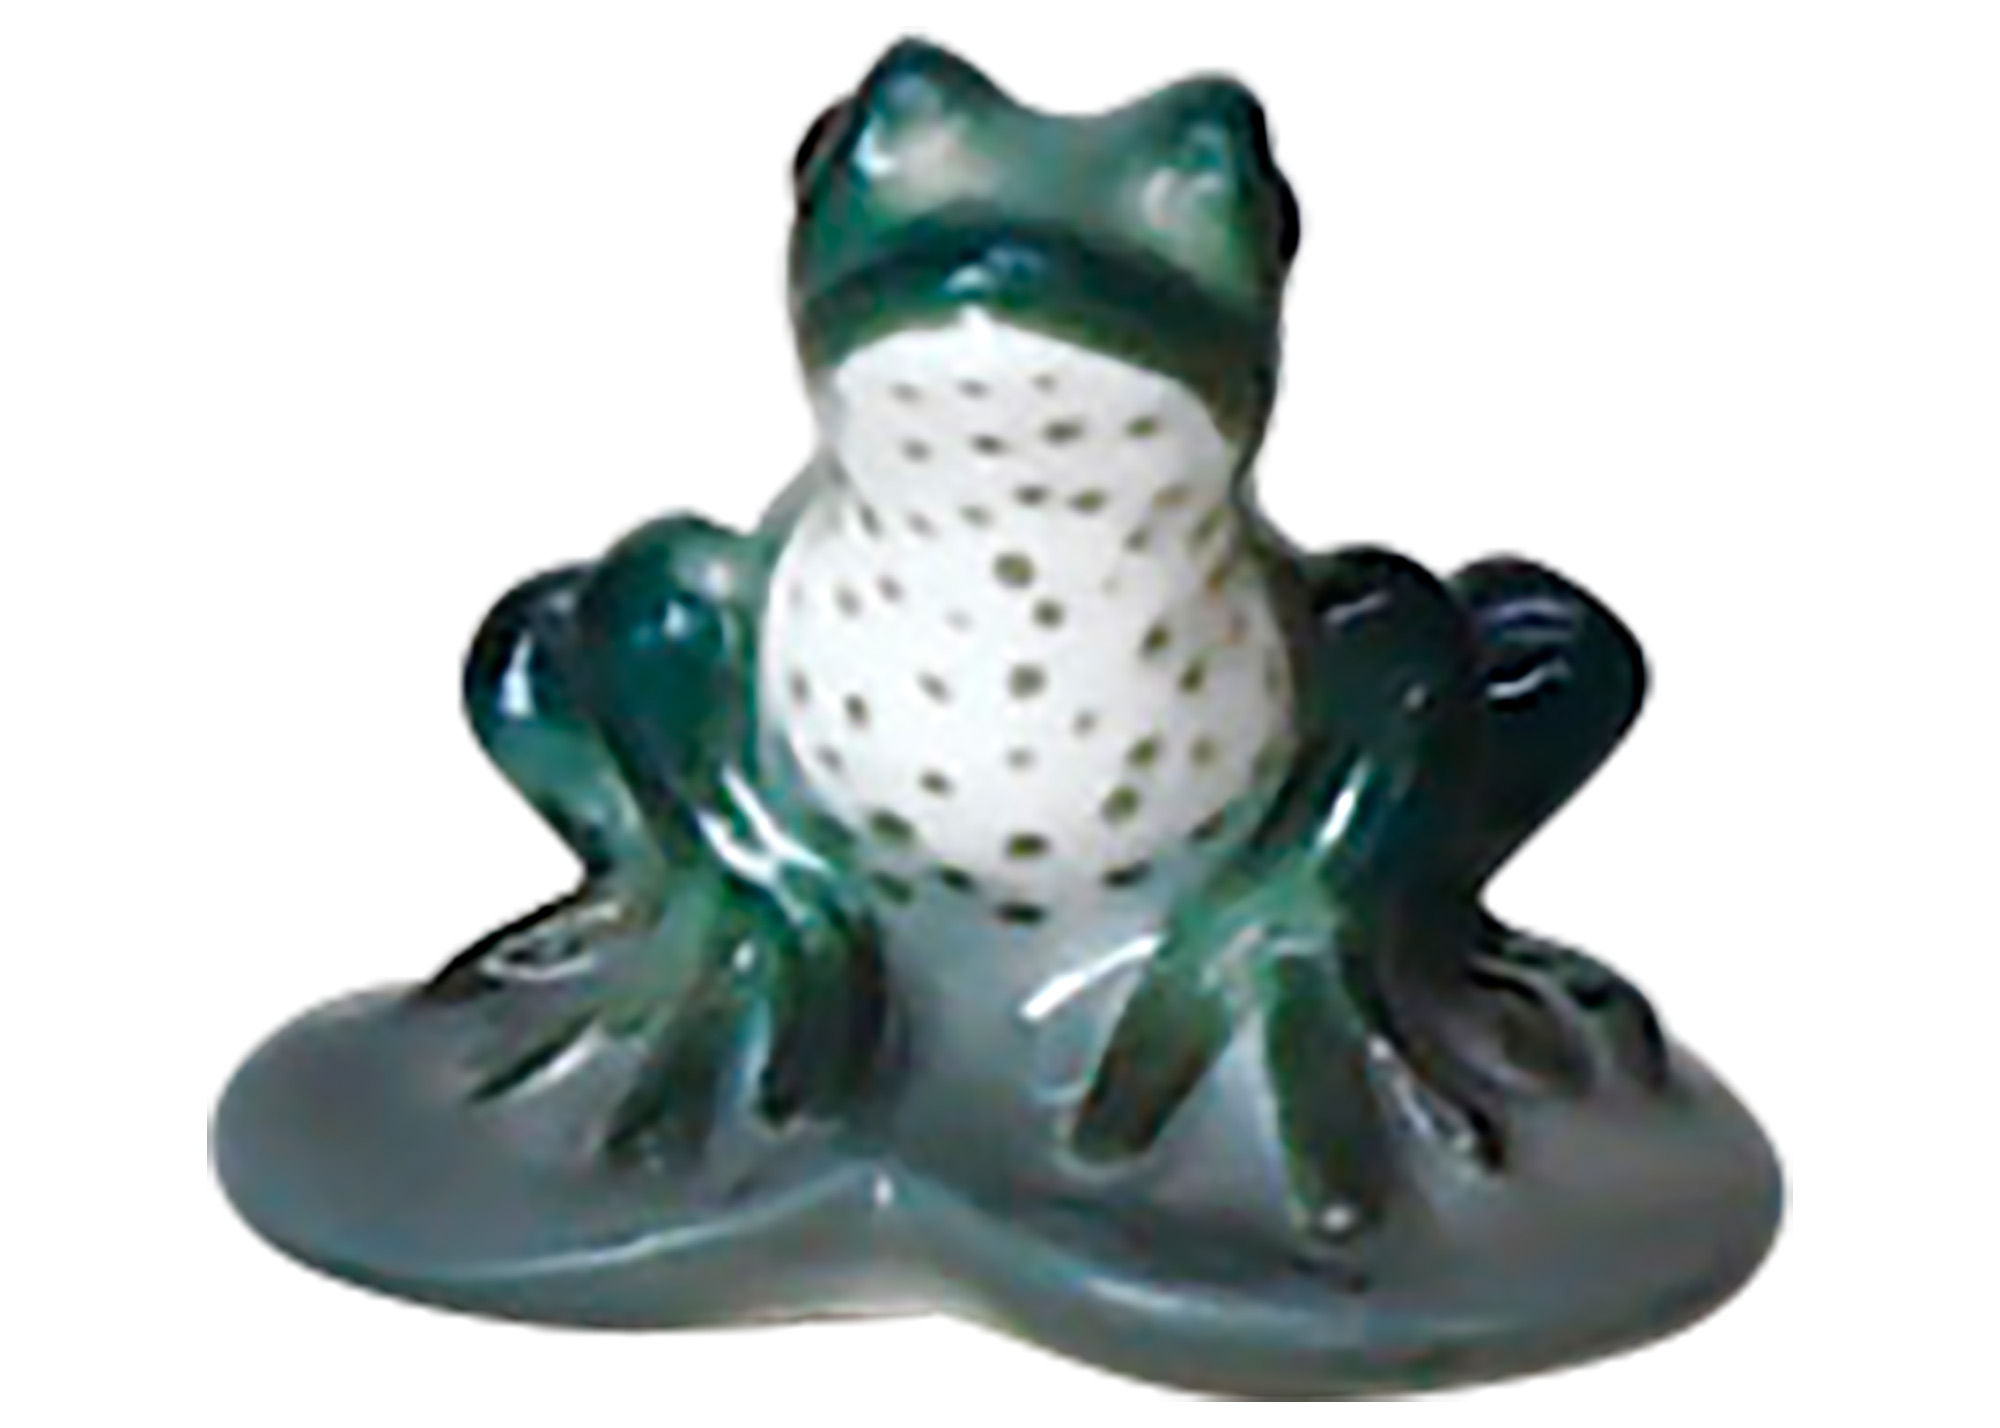 Buy Green Frog Figurine at GoldenCockerel.com